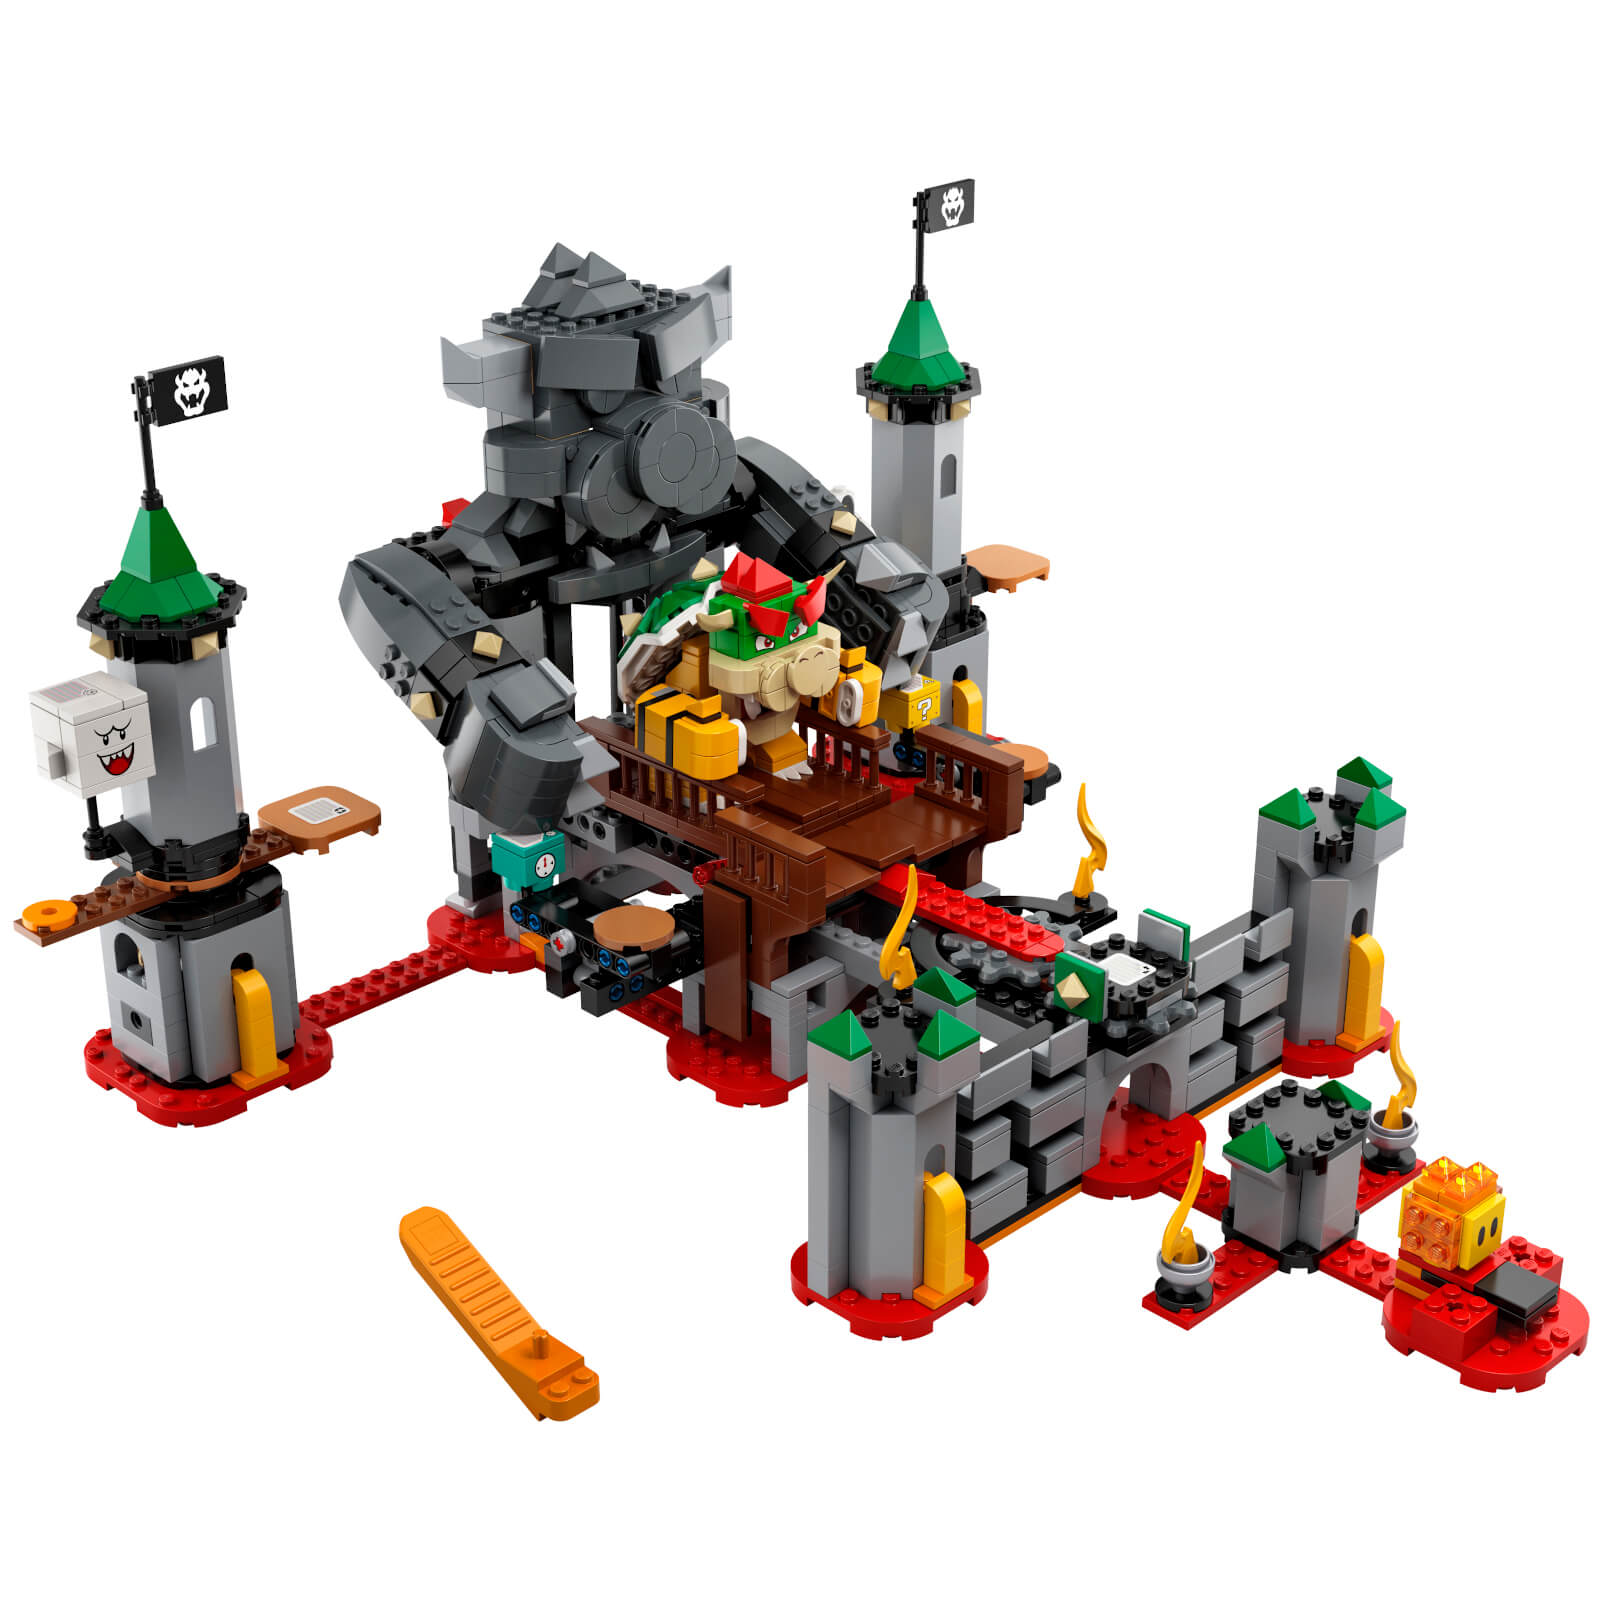 LEGO Super Mario Bowsers Castle Battle Expansion Set (71369)